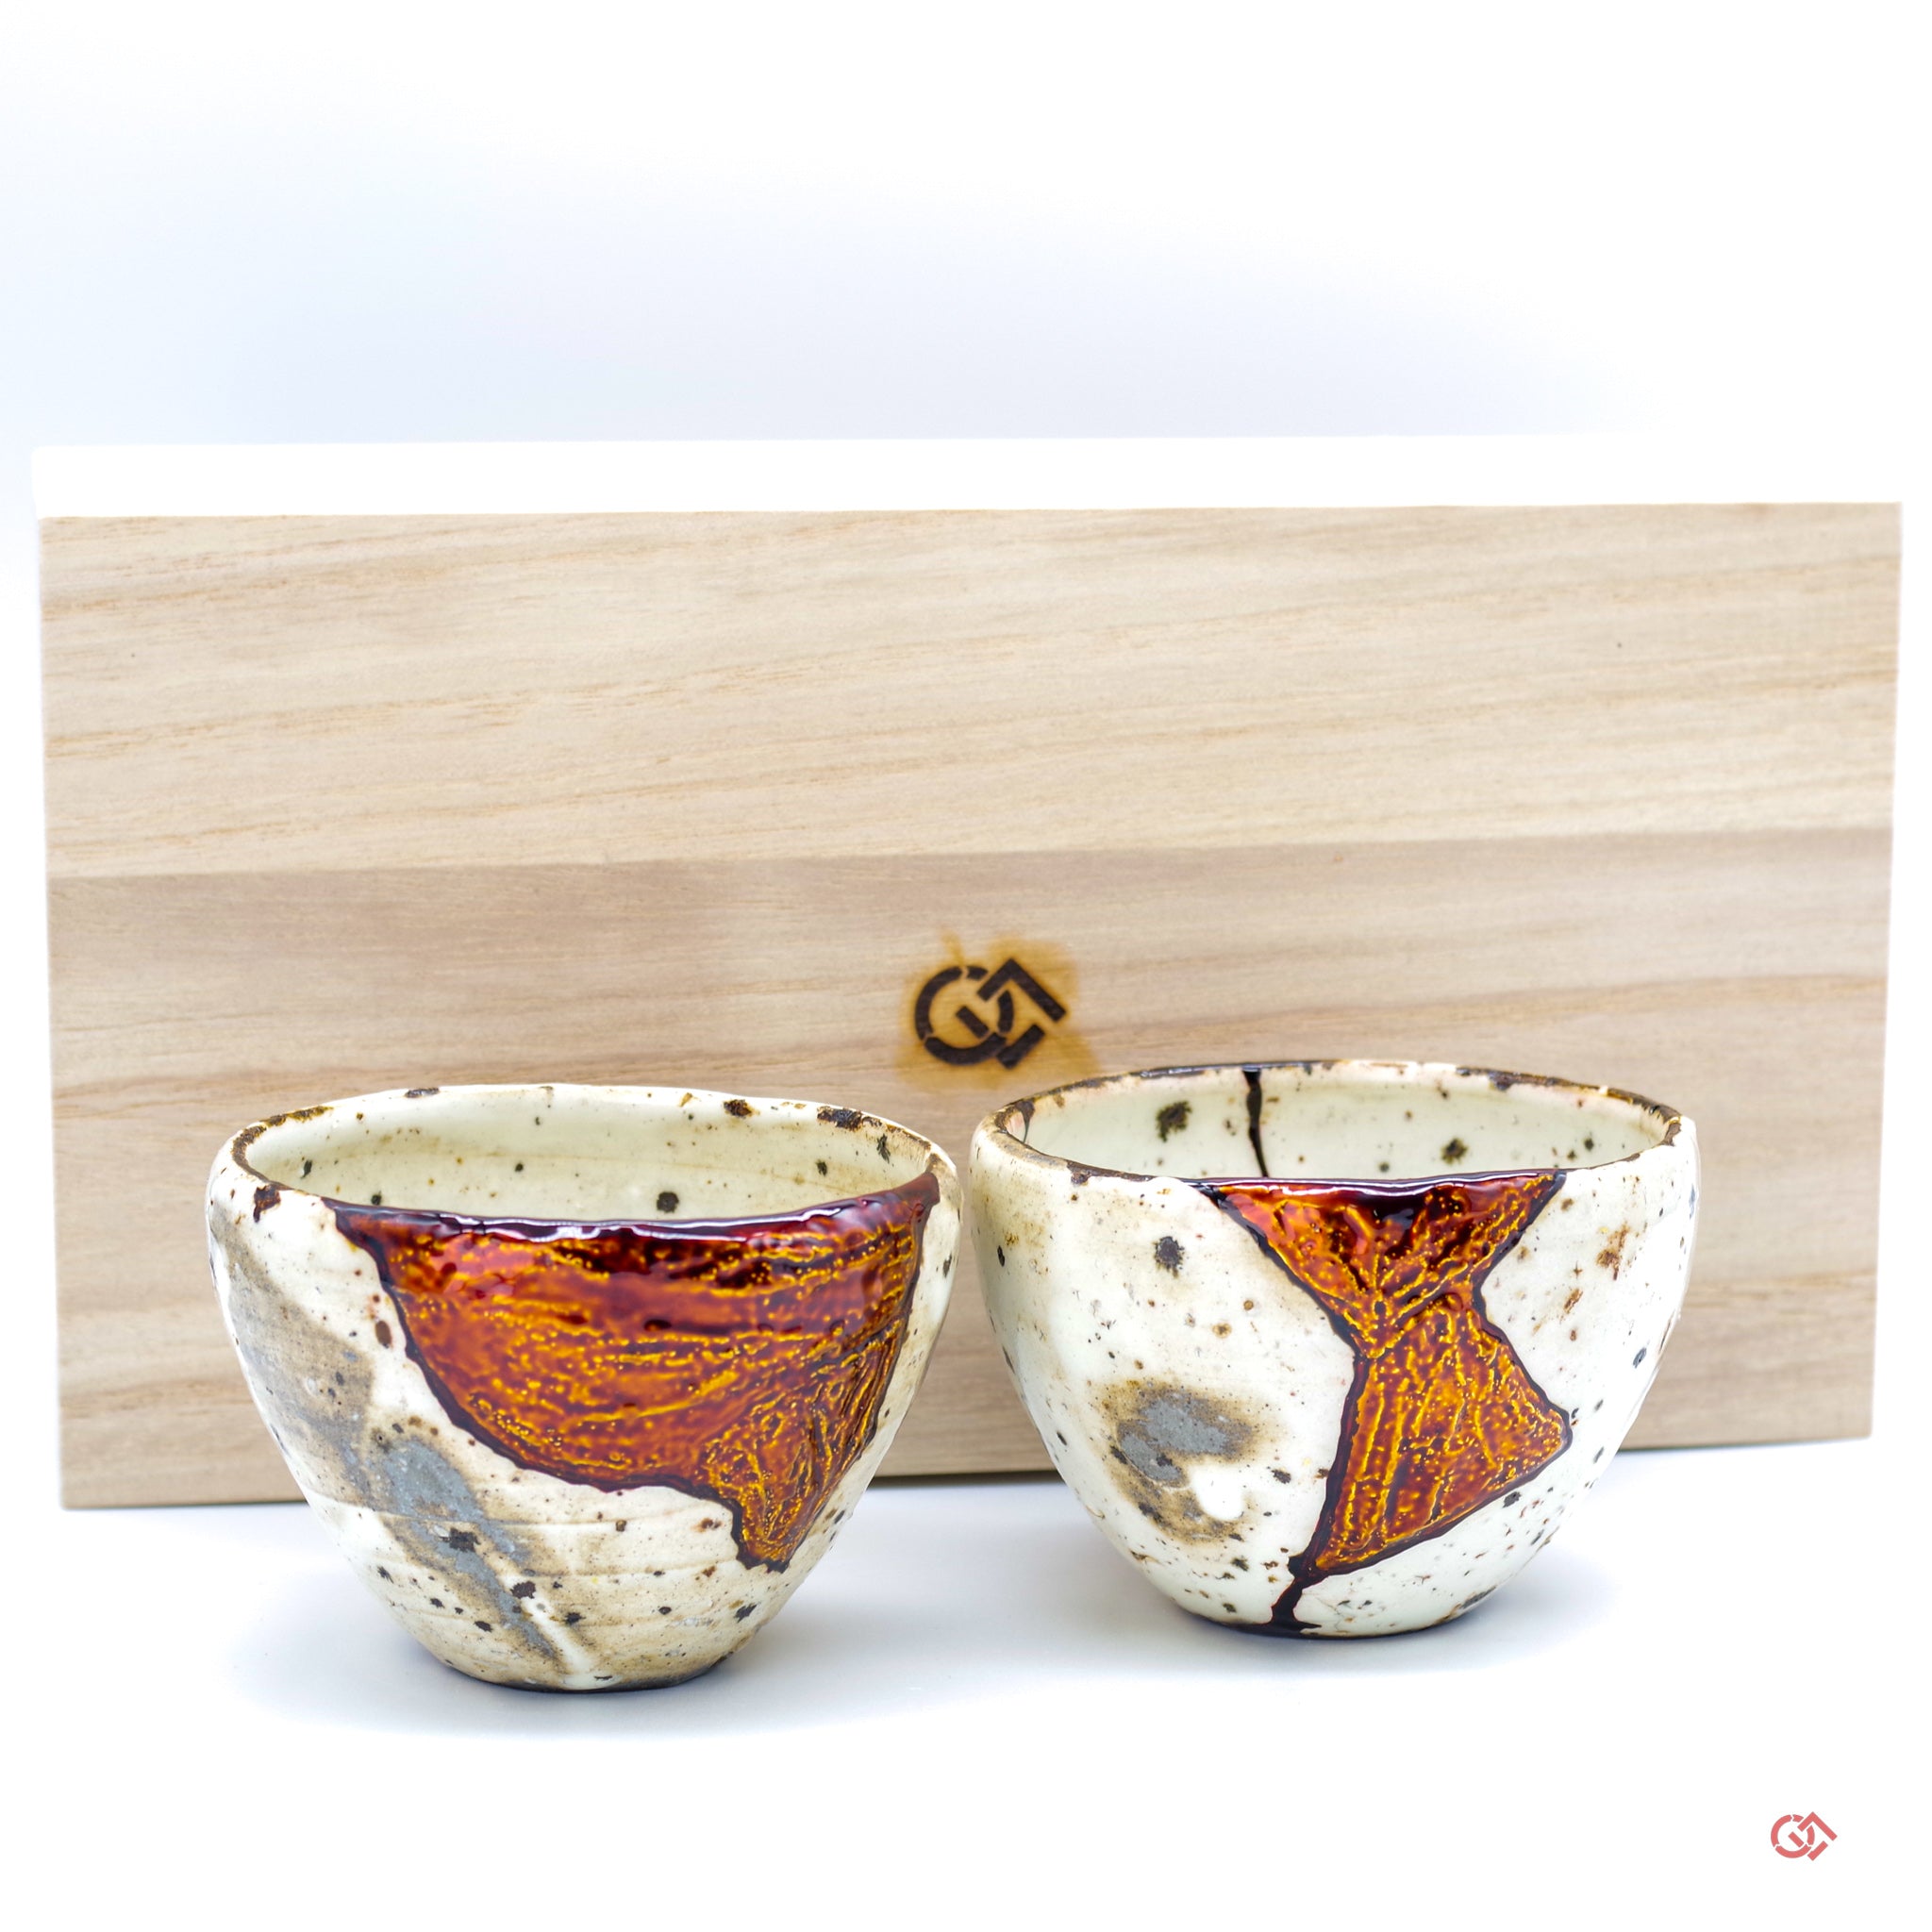 Paulownia box for Kintsugi pottery